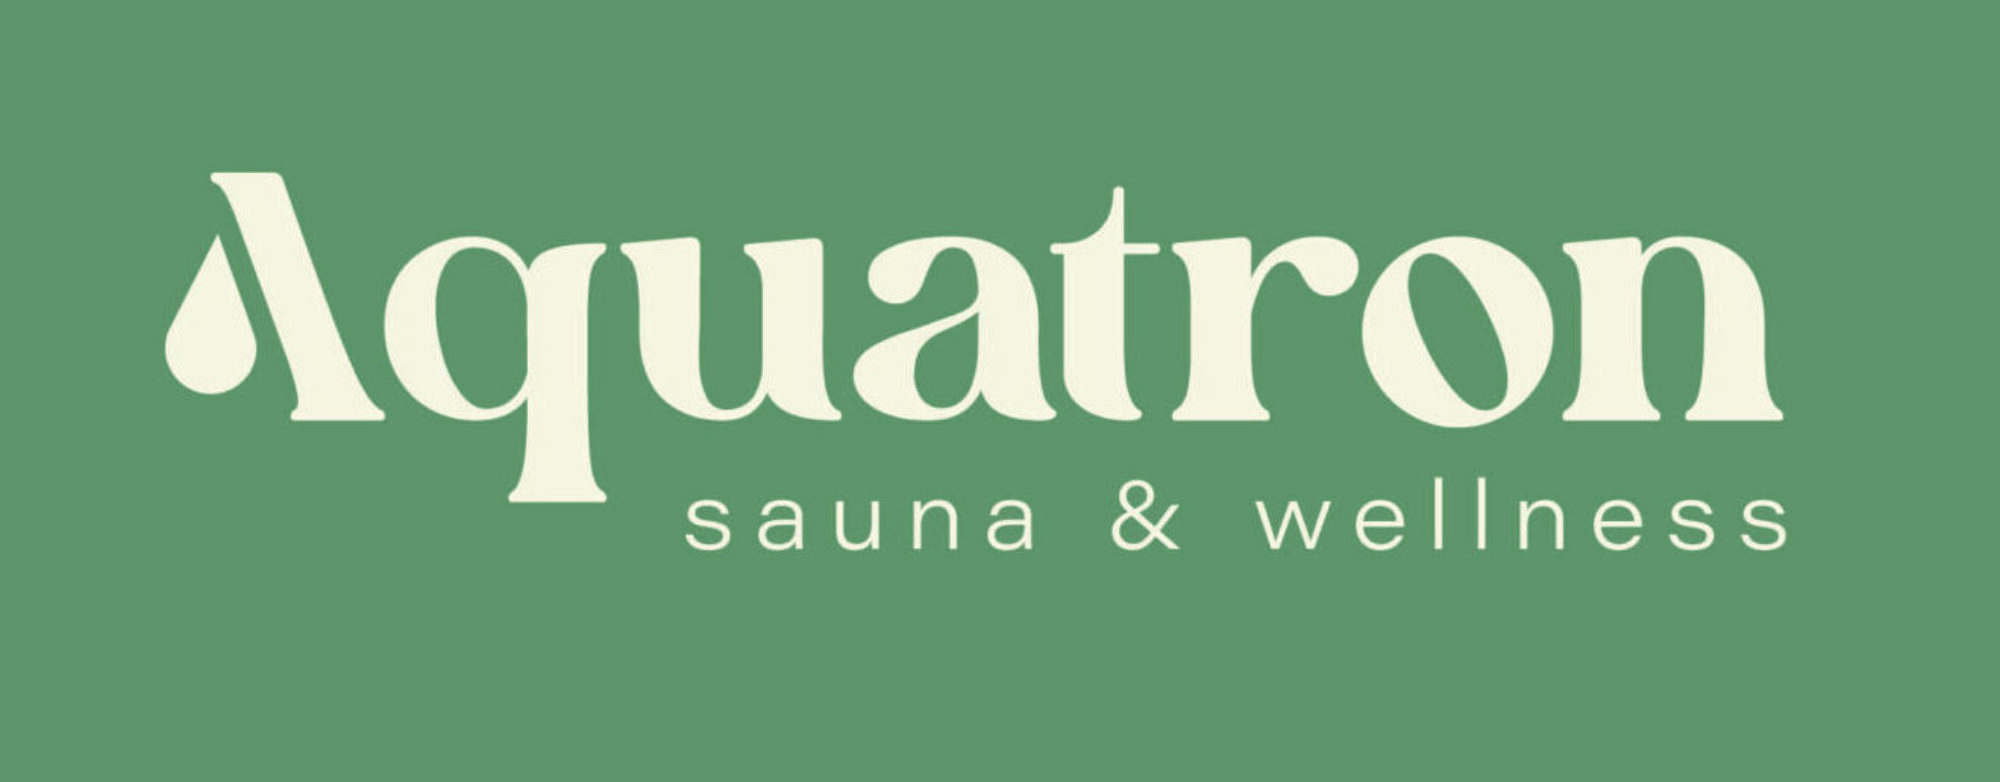 Aquatron sauna & wellness